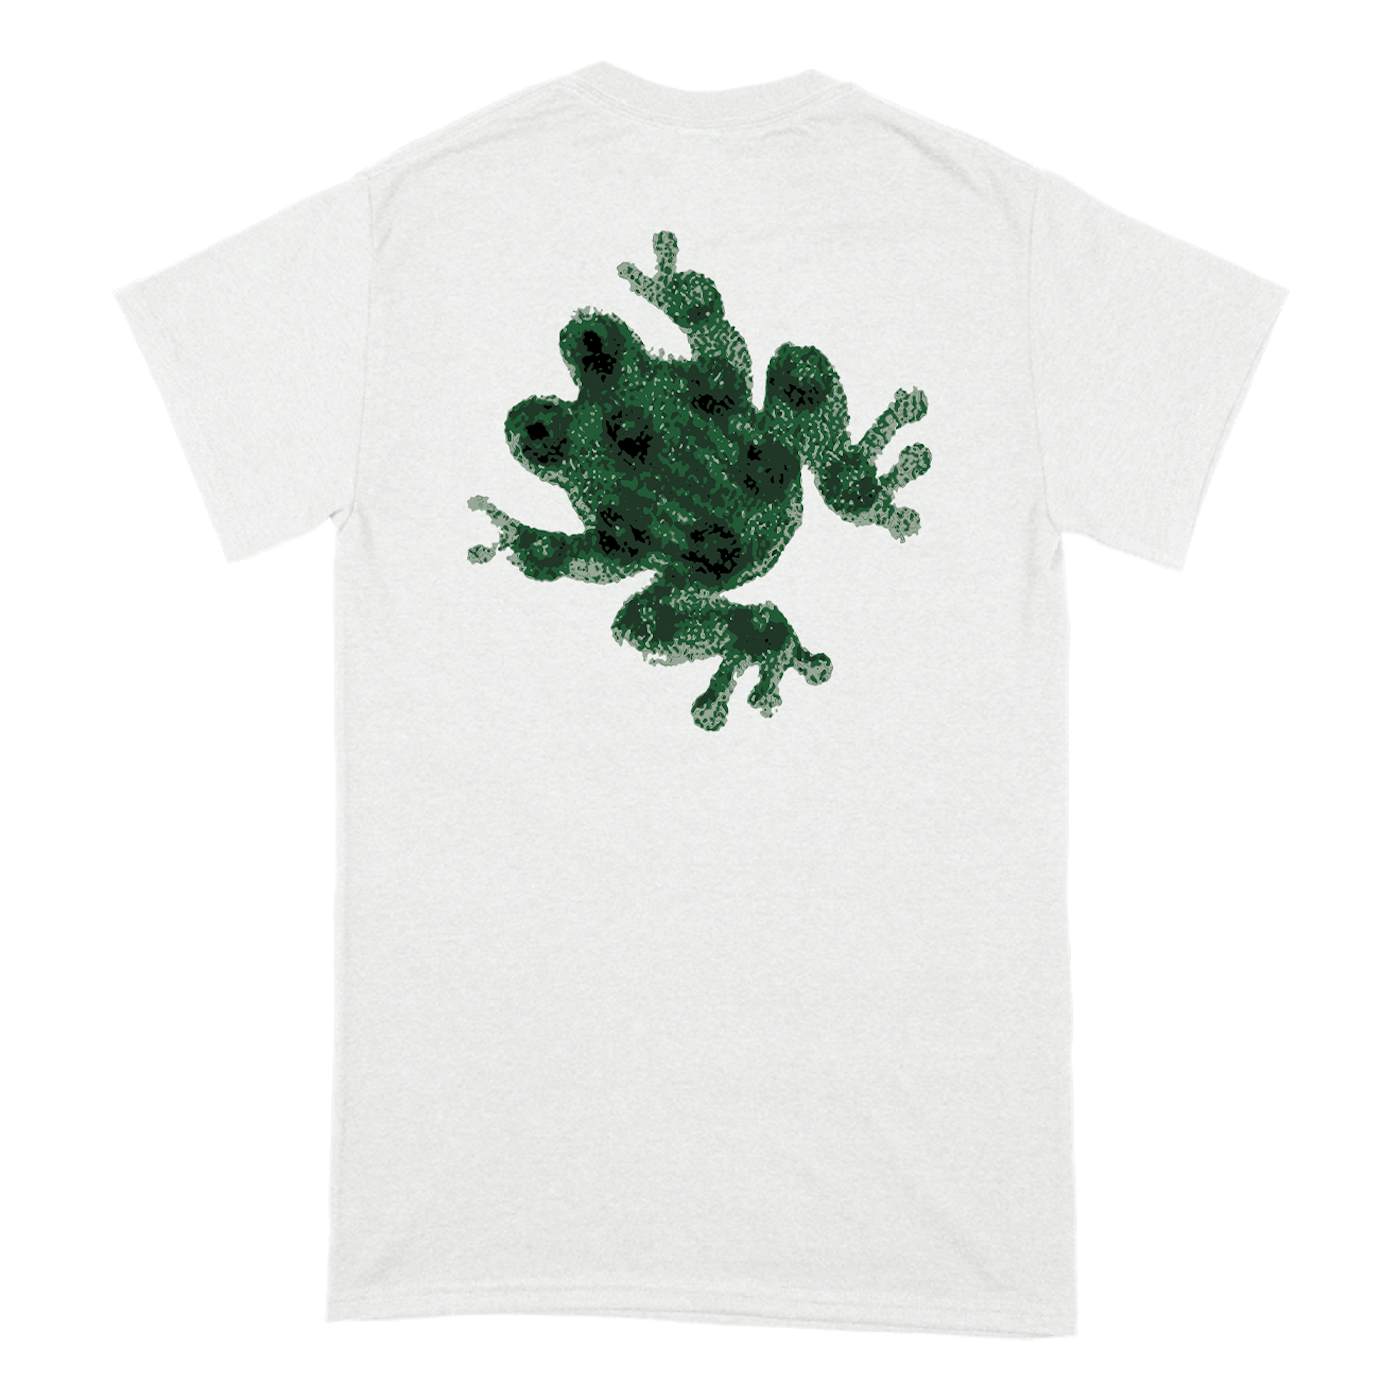 Fleshwater "Frog" T-Shirt